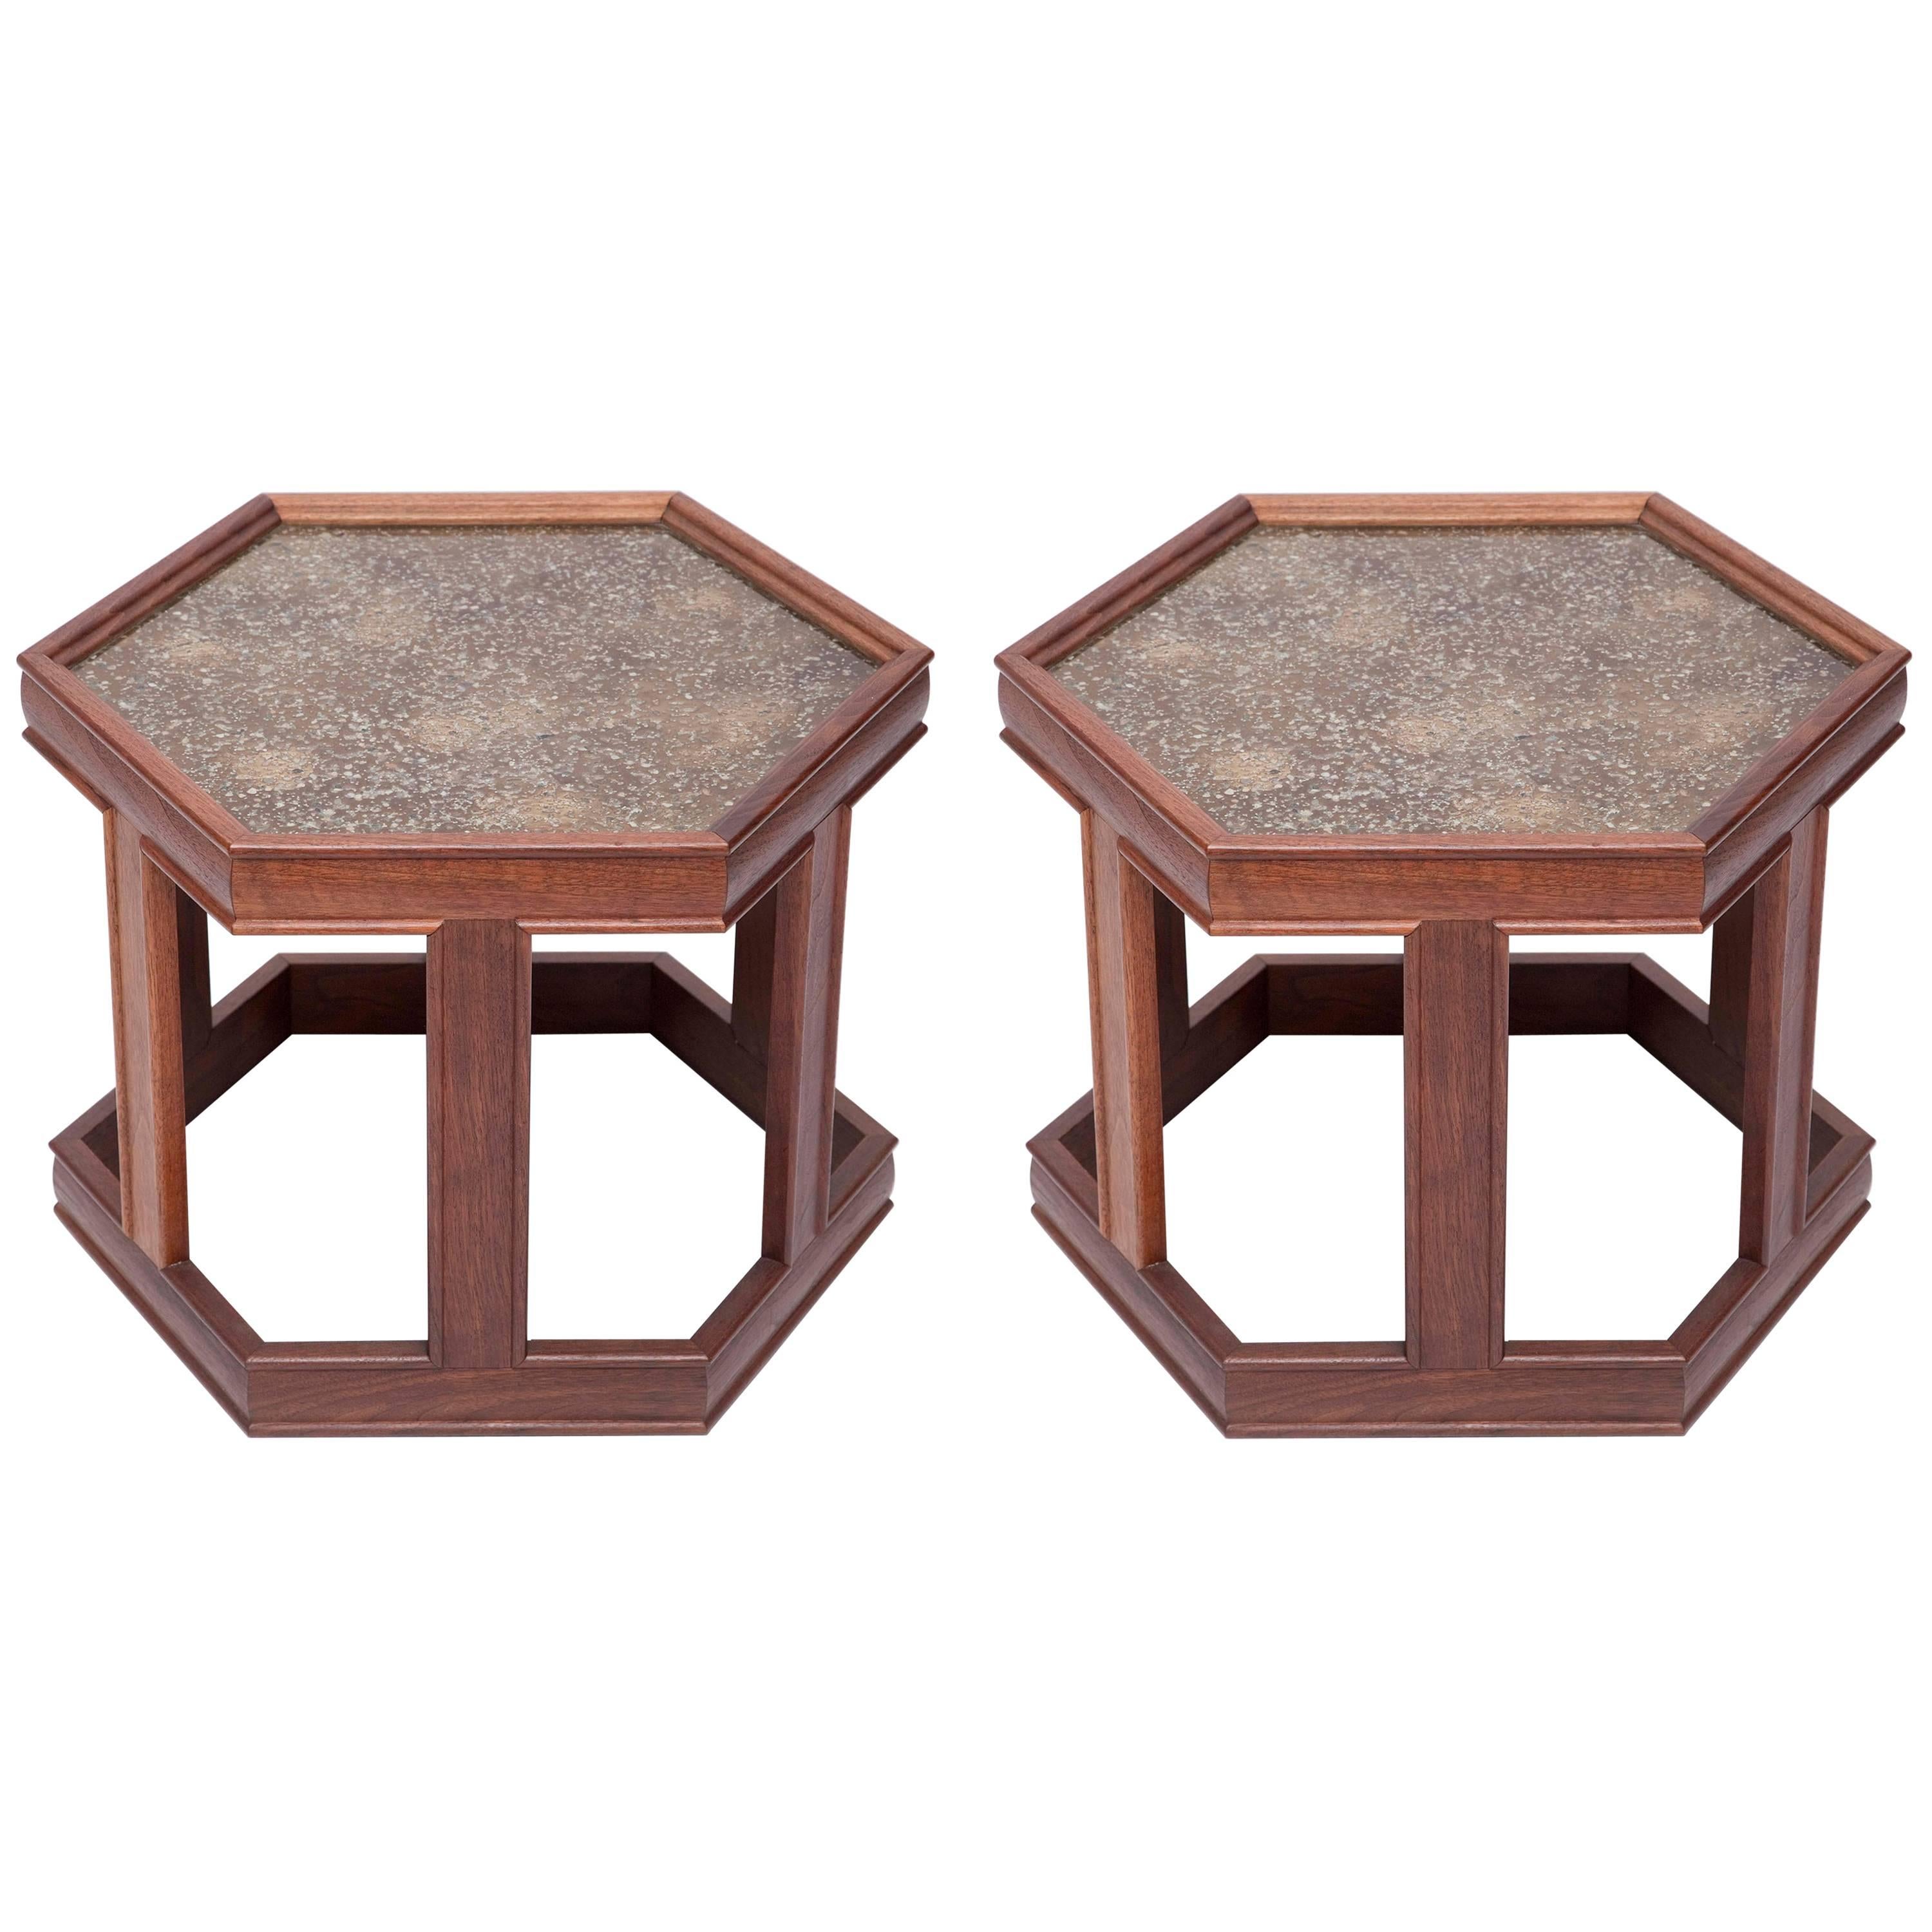 Pair of Hexagonal Occasional Tables by John Keal for Brown Saltman